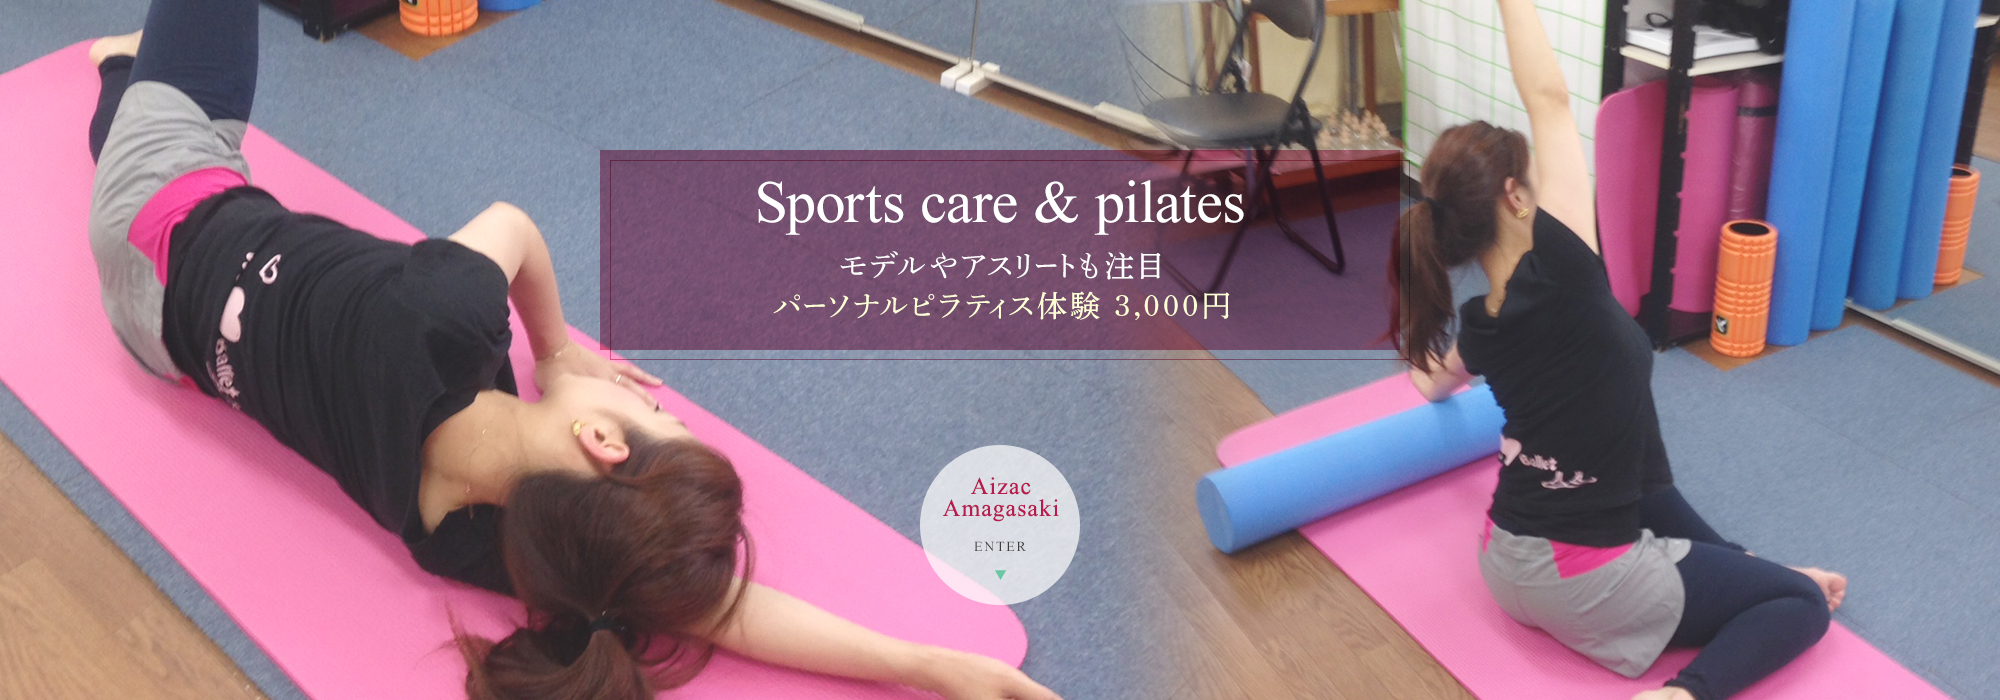 Sports care & pilates モデルやアスリートも注目 パーソナルピラティス体験 3,000円 Aizac Amagasaki ENTER